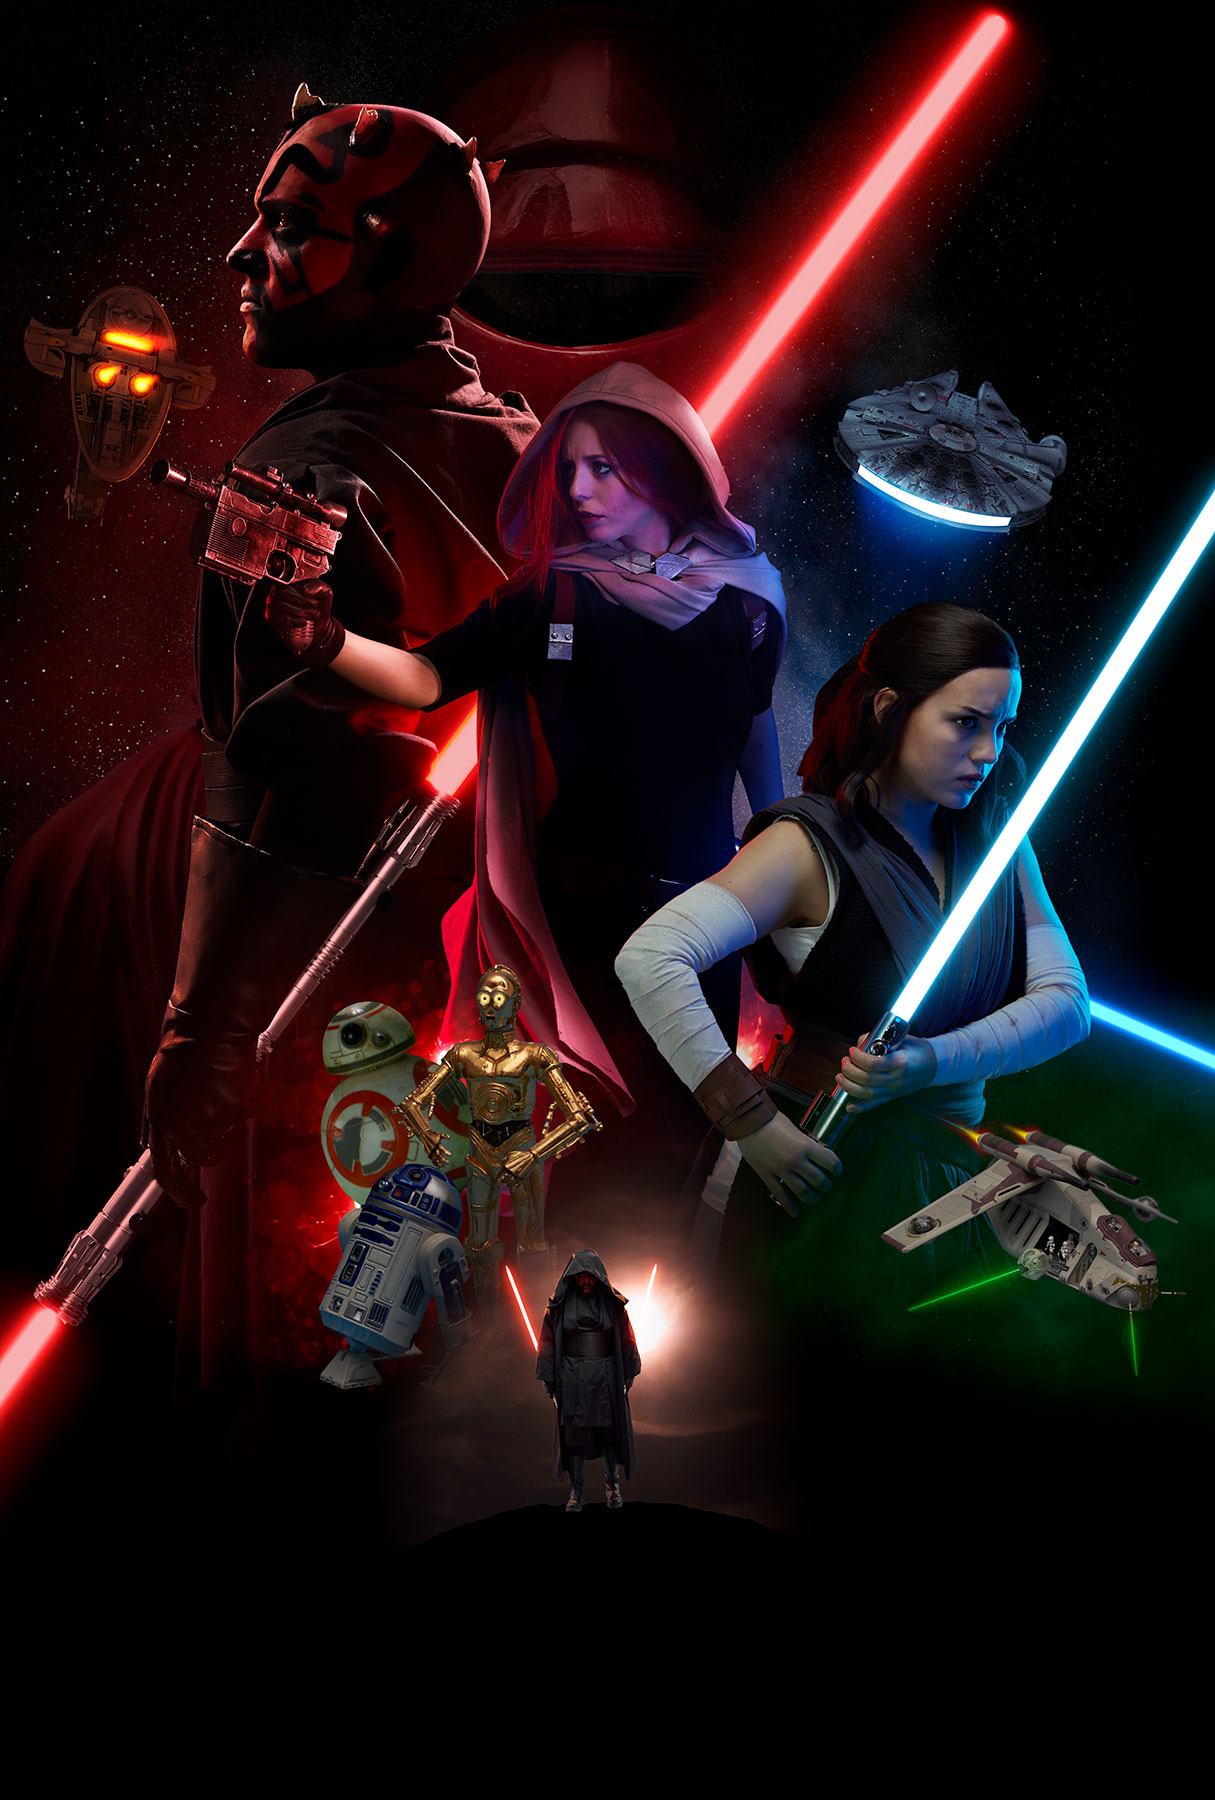 Sayanoff Arthur Star Wars Poster 02 08